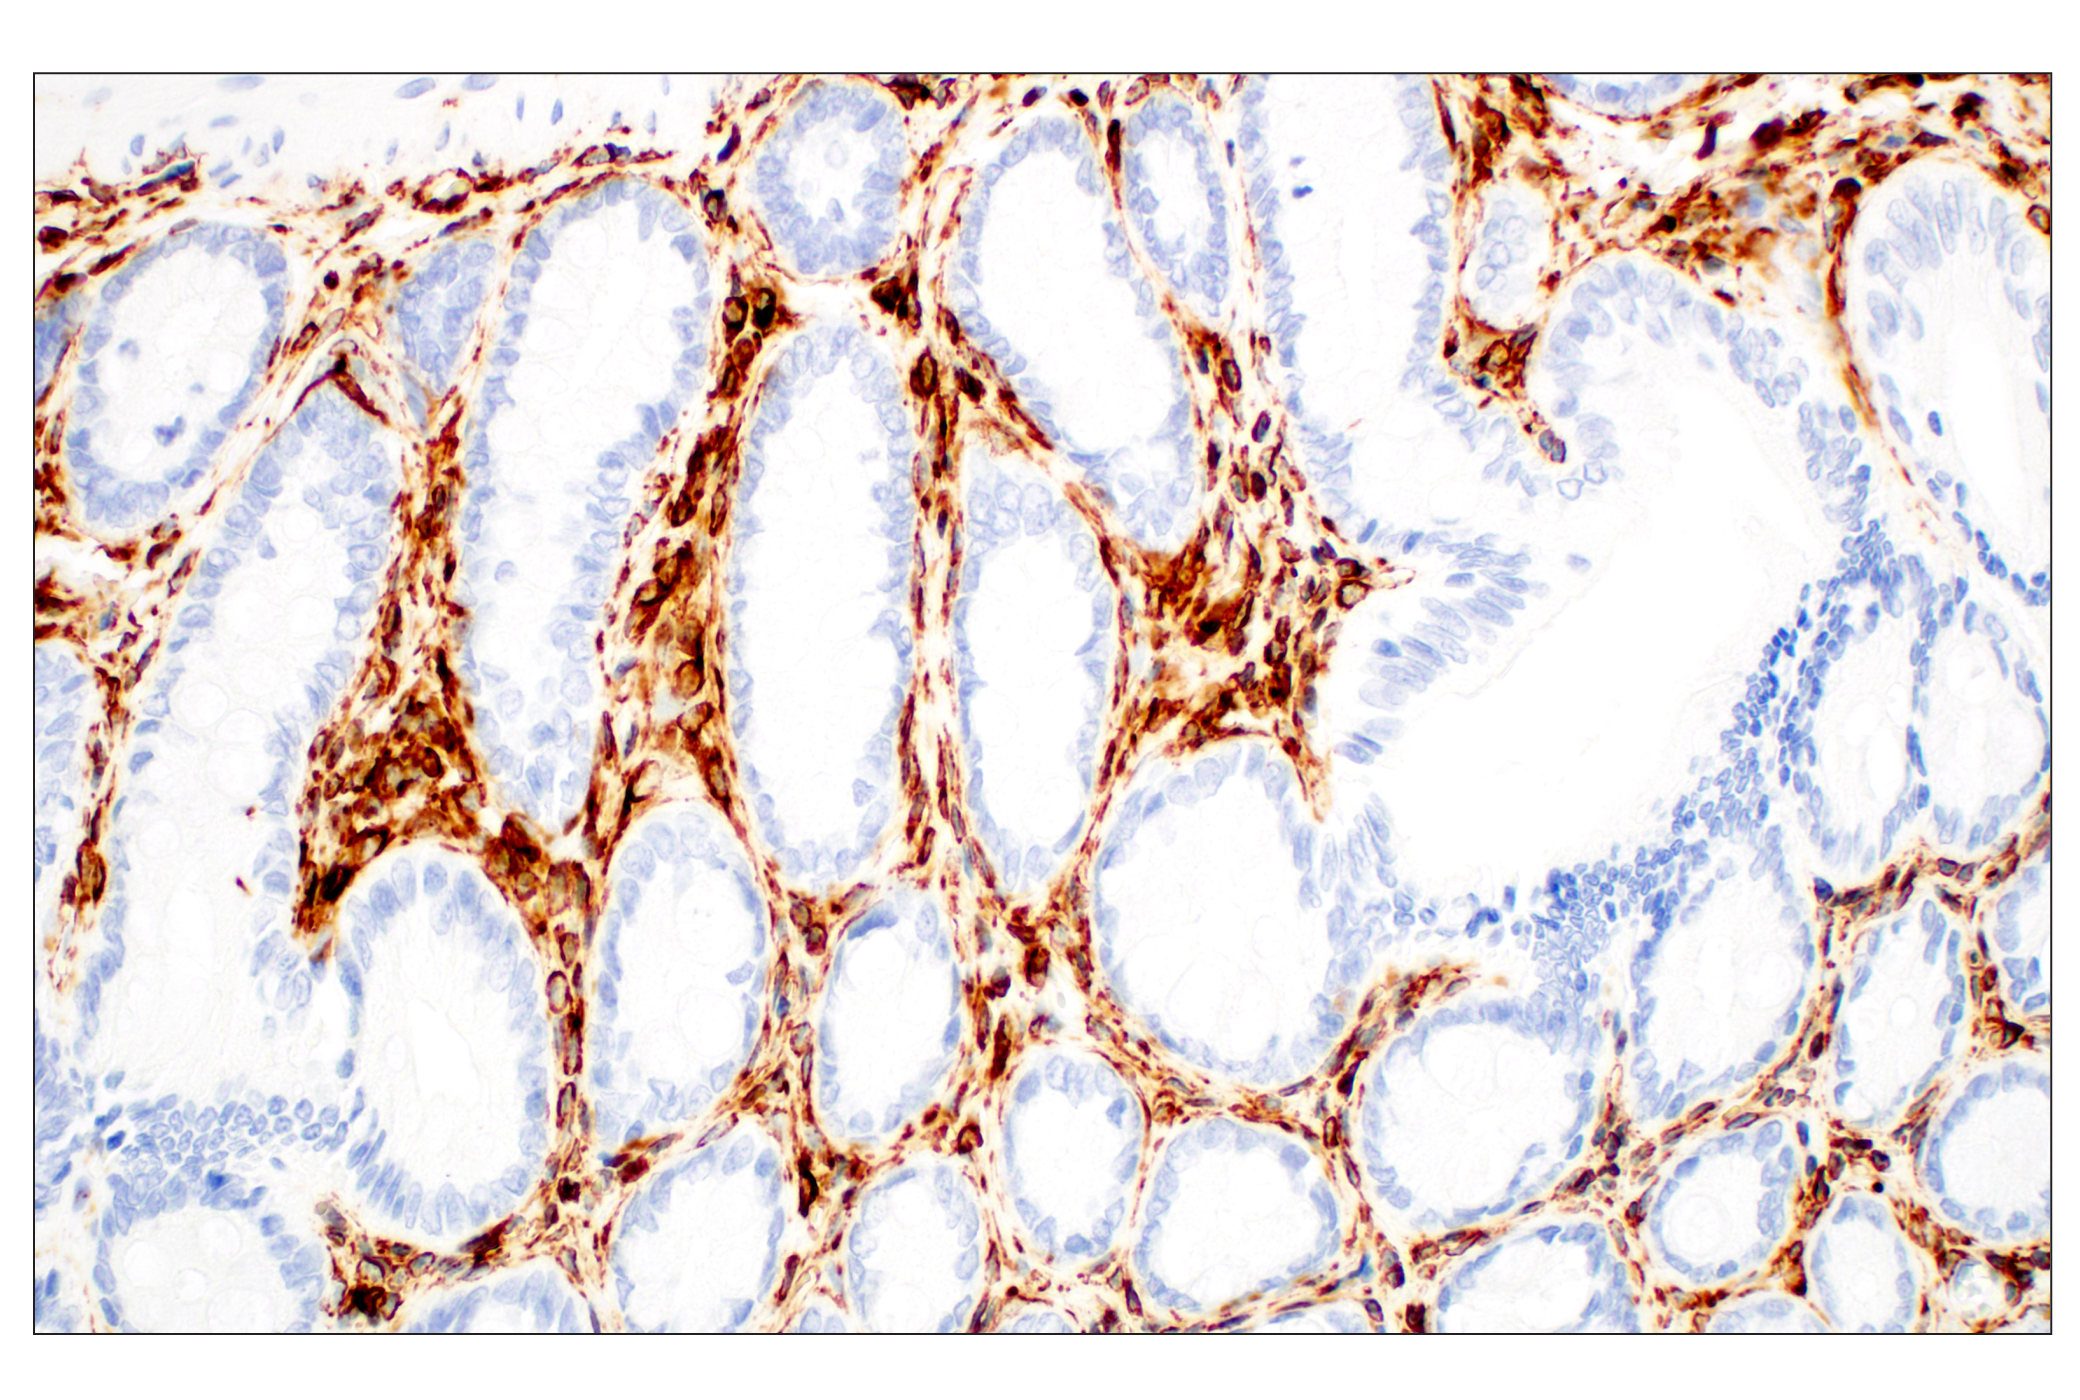  Image 57: Epithelial-Mesenchymal Transition (EMT) Antibody Sampler Kit